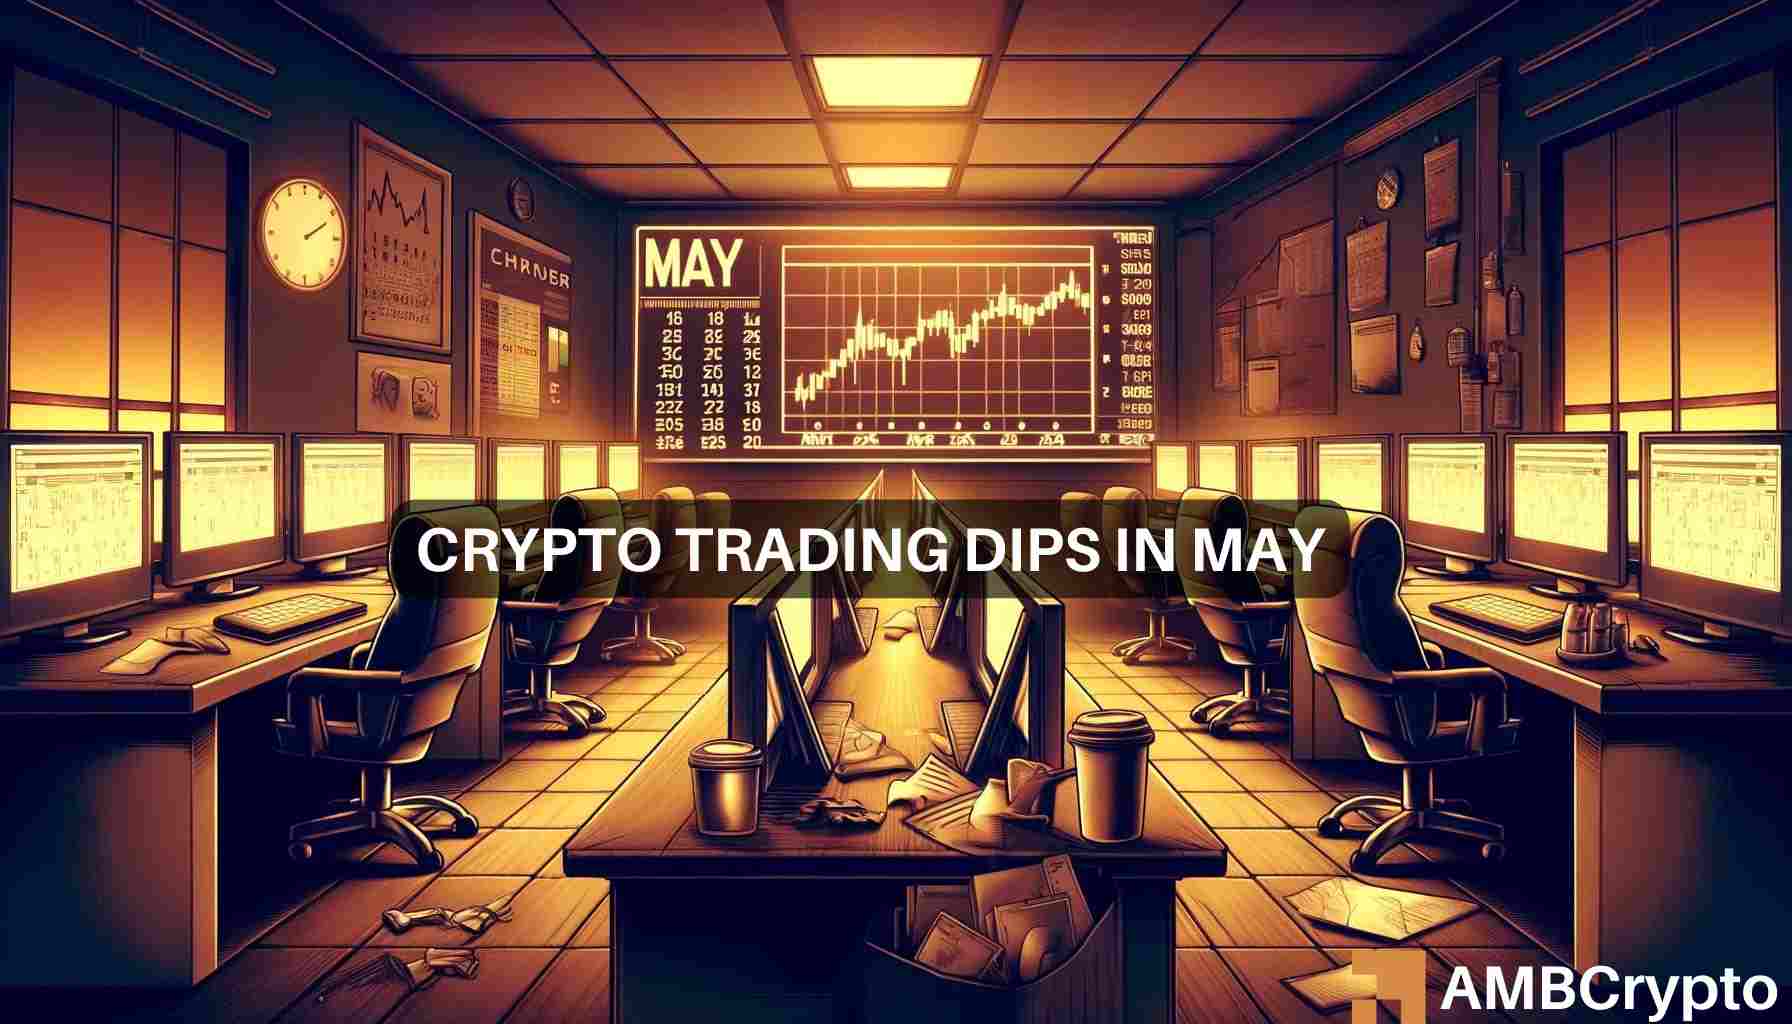 Bitcoin halving fallout: Crypto trading drops 20% in May